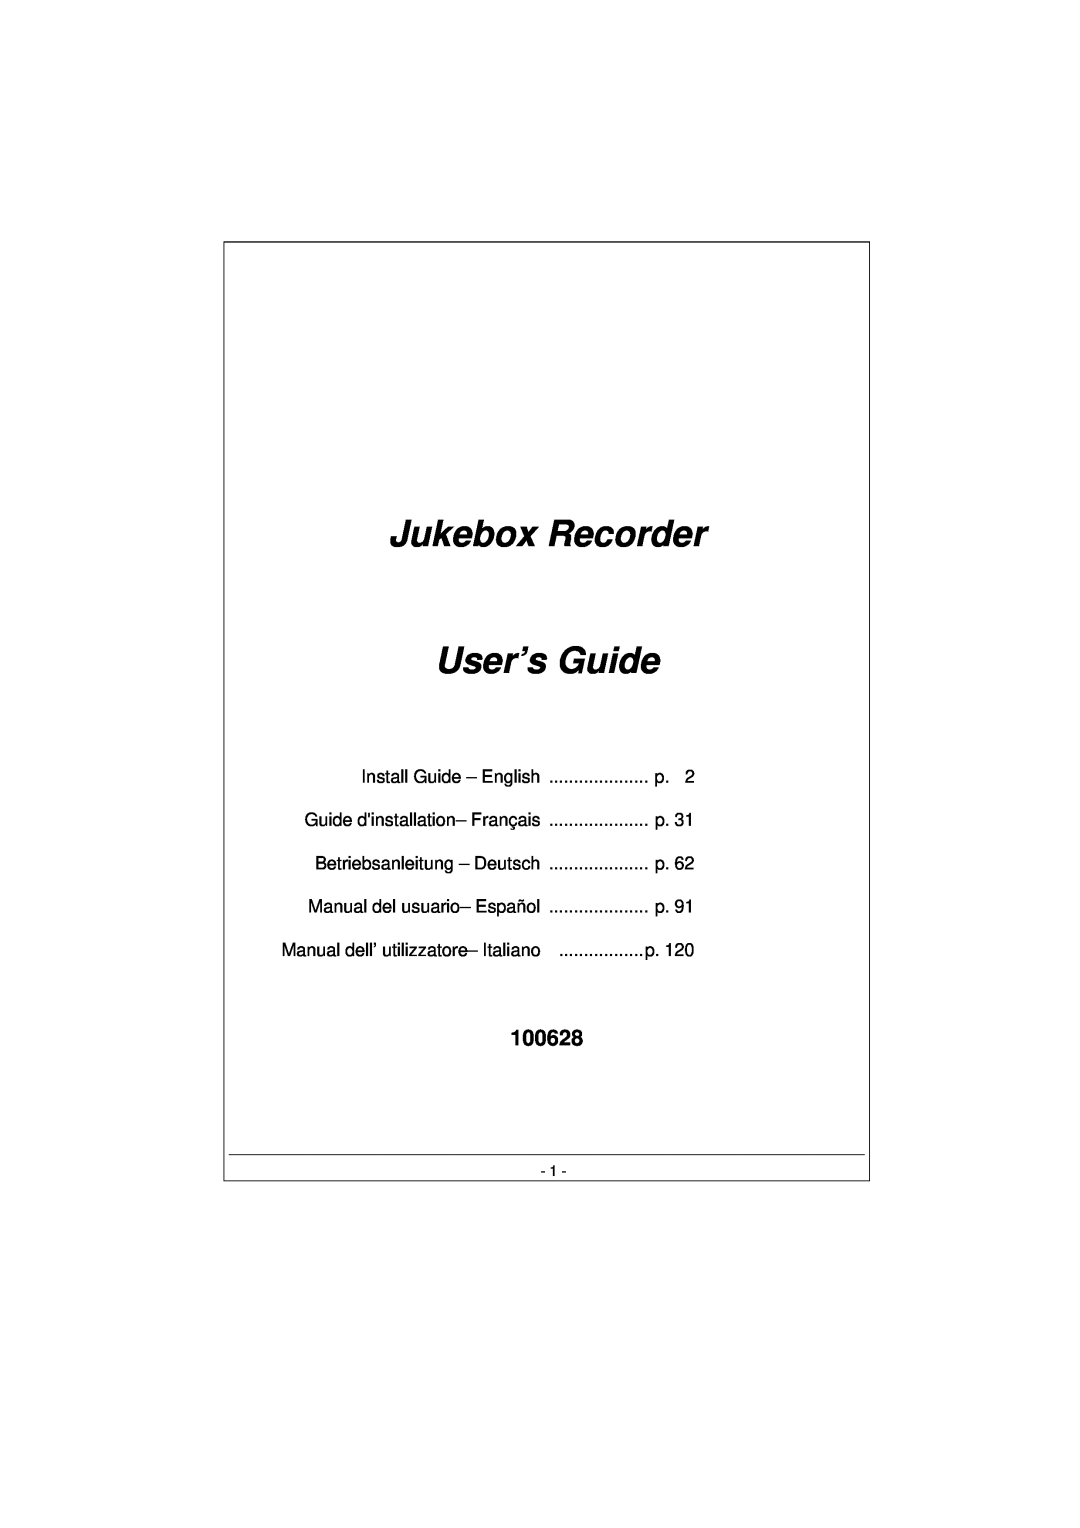 Archos 100628 manual Jukebox Recorder User’s Guide, Install Guide – English, Guide dinstallation– Français 